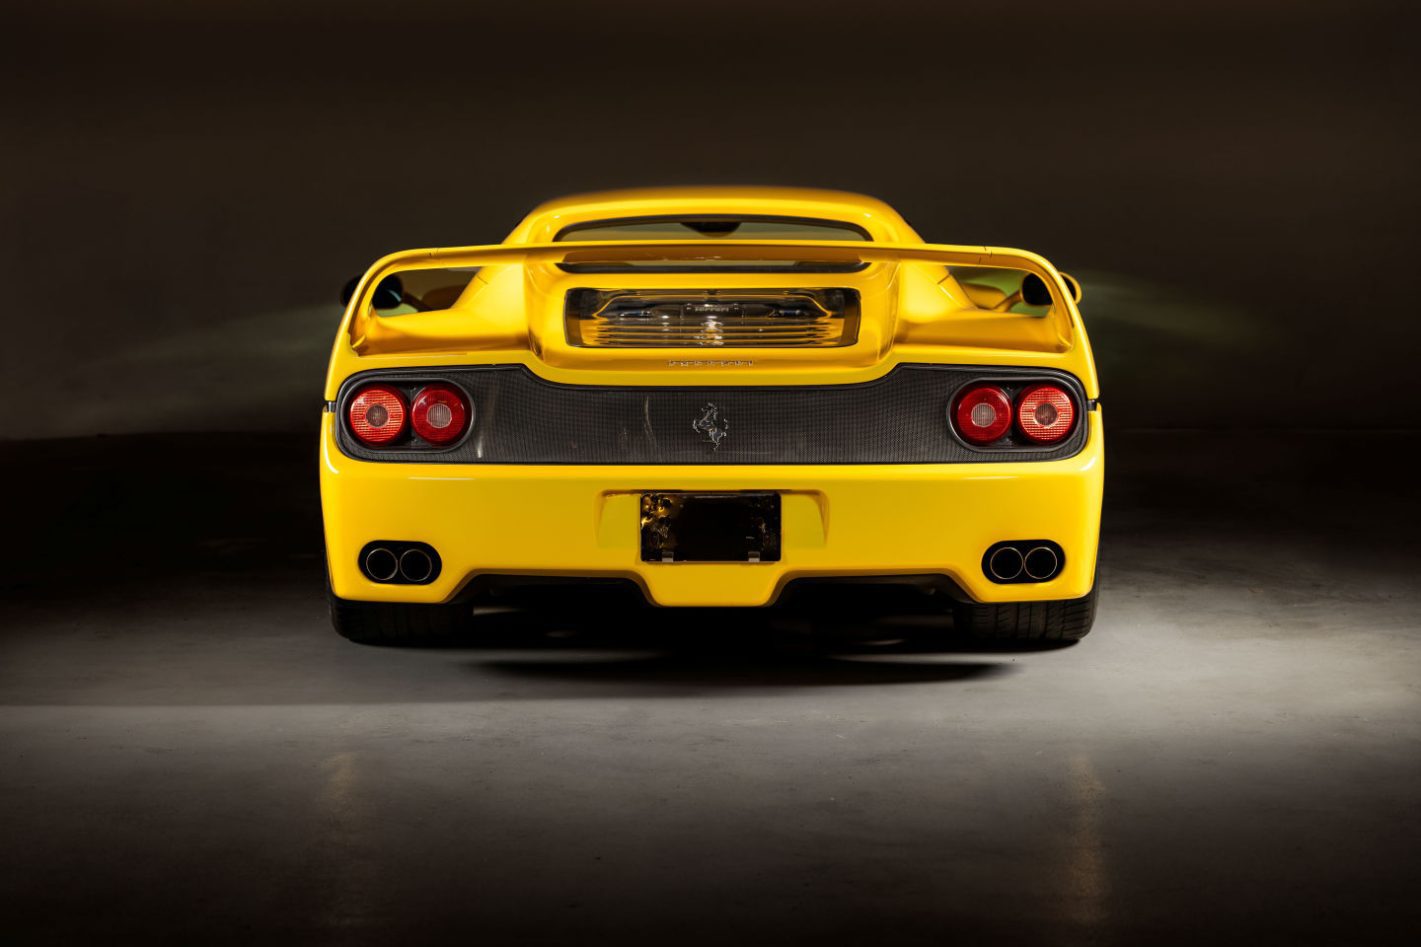 FOR SALE: Giallo Modena Ferrari F50, auctions, Cars for sale, Ferrai, ferrari f50, RM Sotheby’s